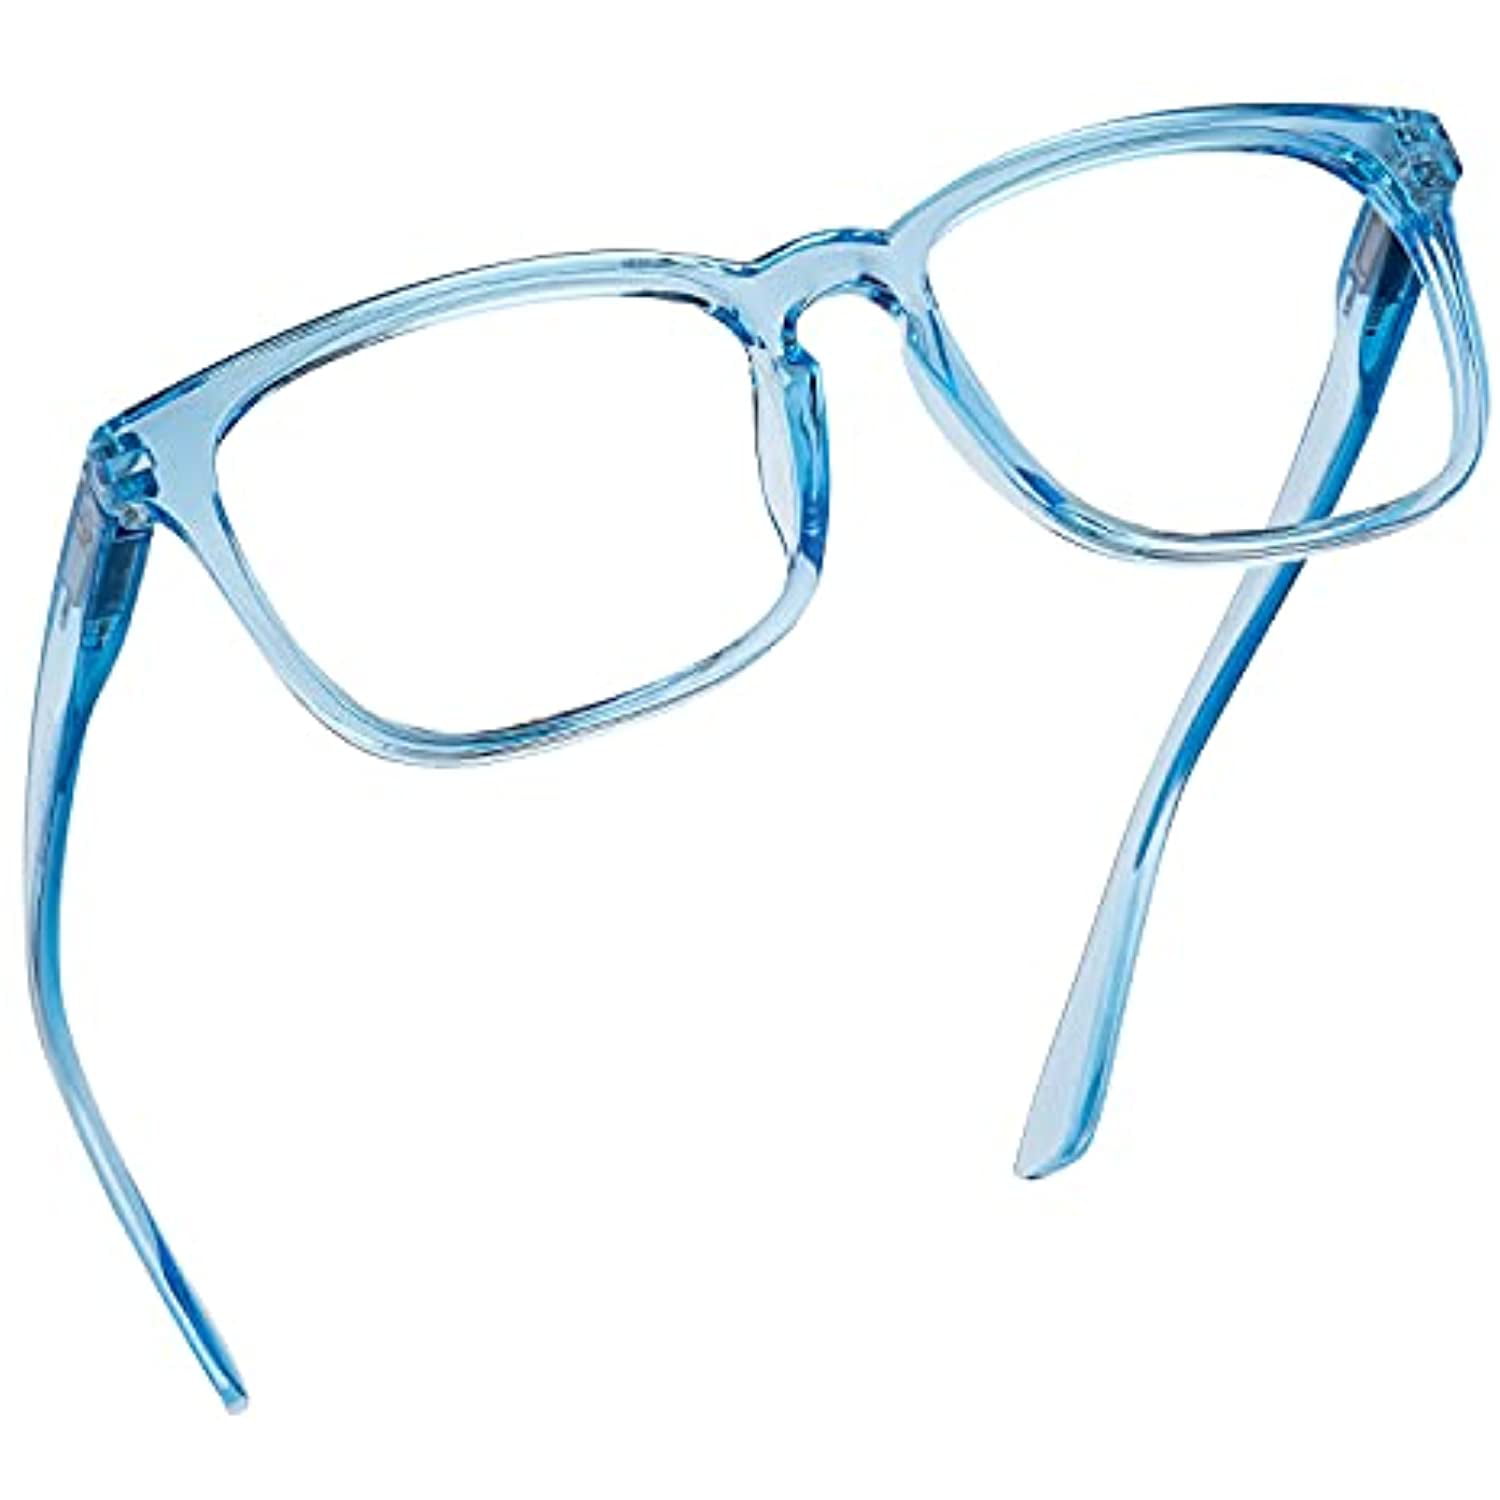 UV protection Computer Glasses fashionable for men and women Readerest Blue Light Blocking Reading Glasses Anti Glare Bourbon Tortoise, 3.25 Magnification Anti Eyestrain 